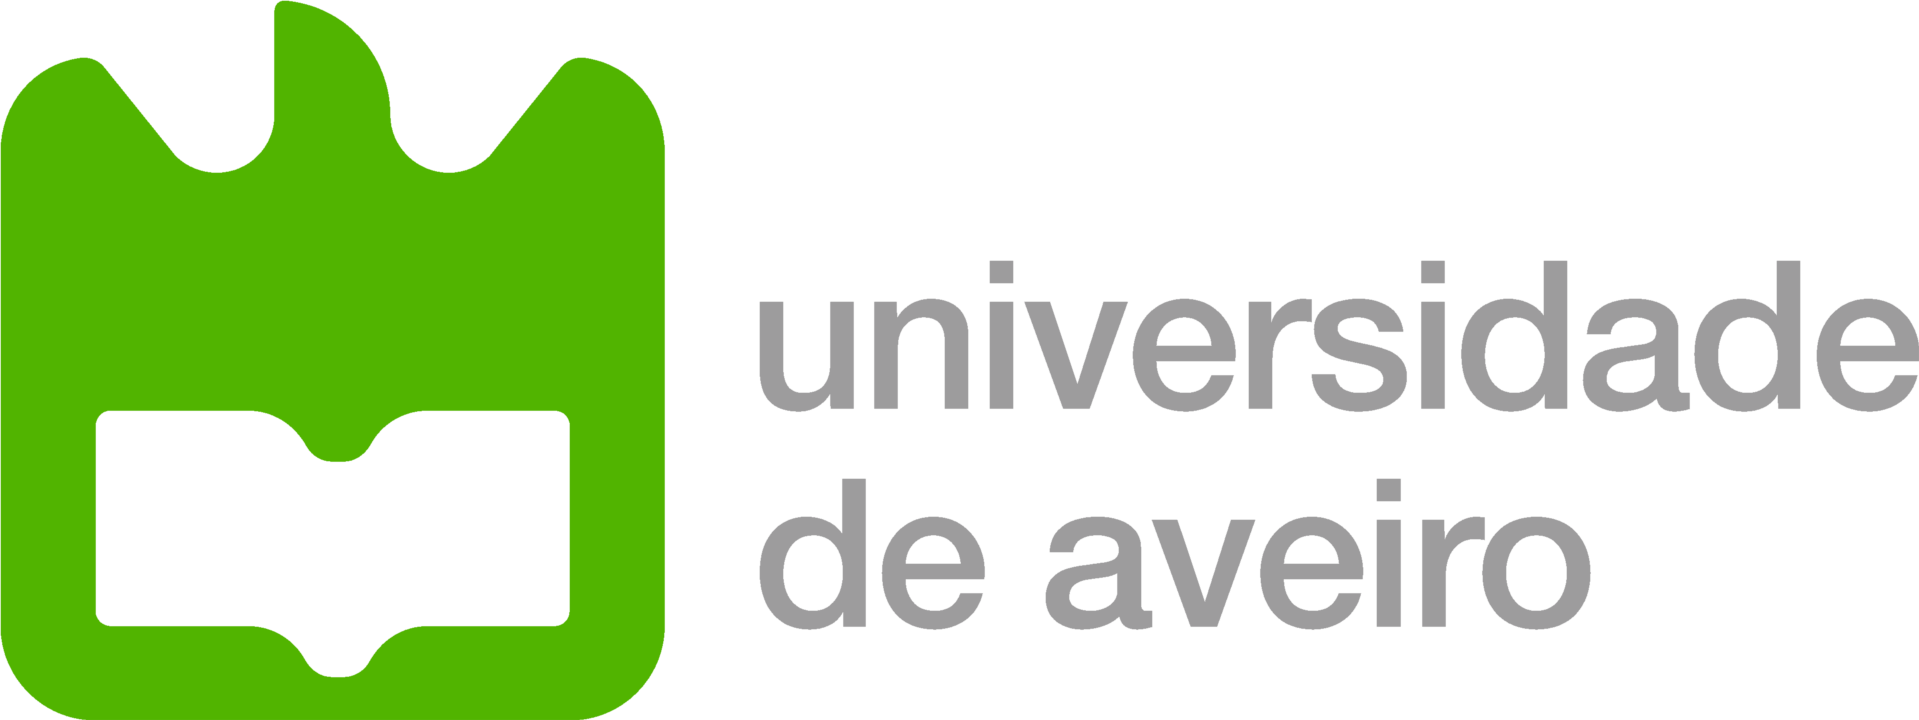 Study in University of Aveiro with Scholarship